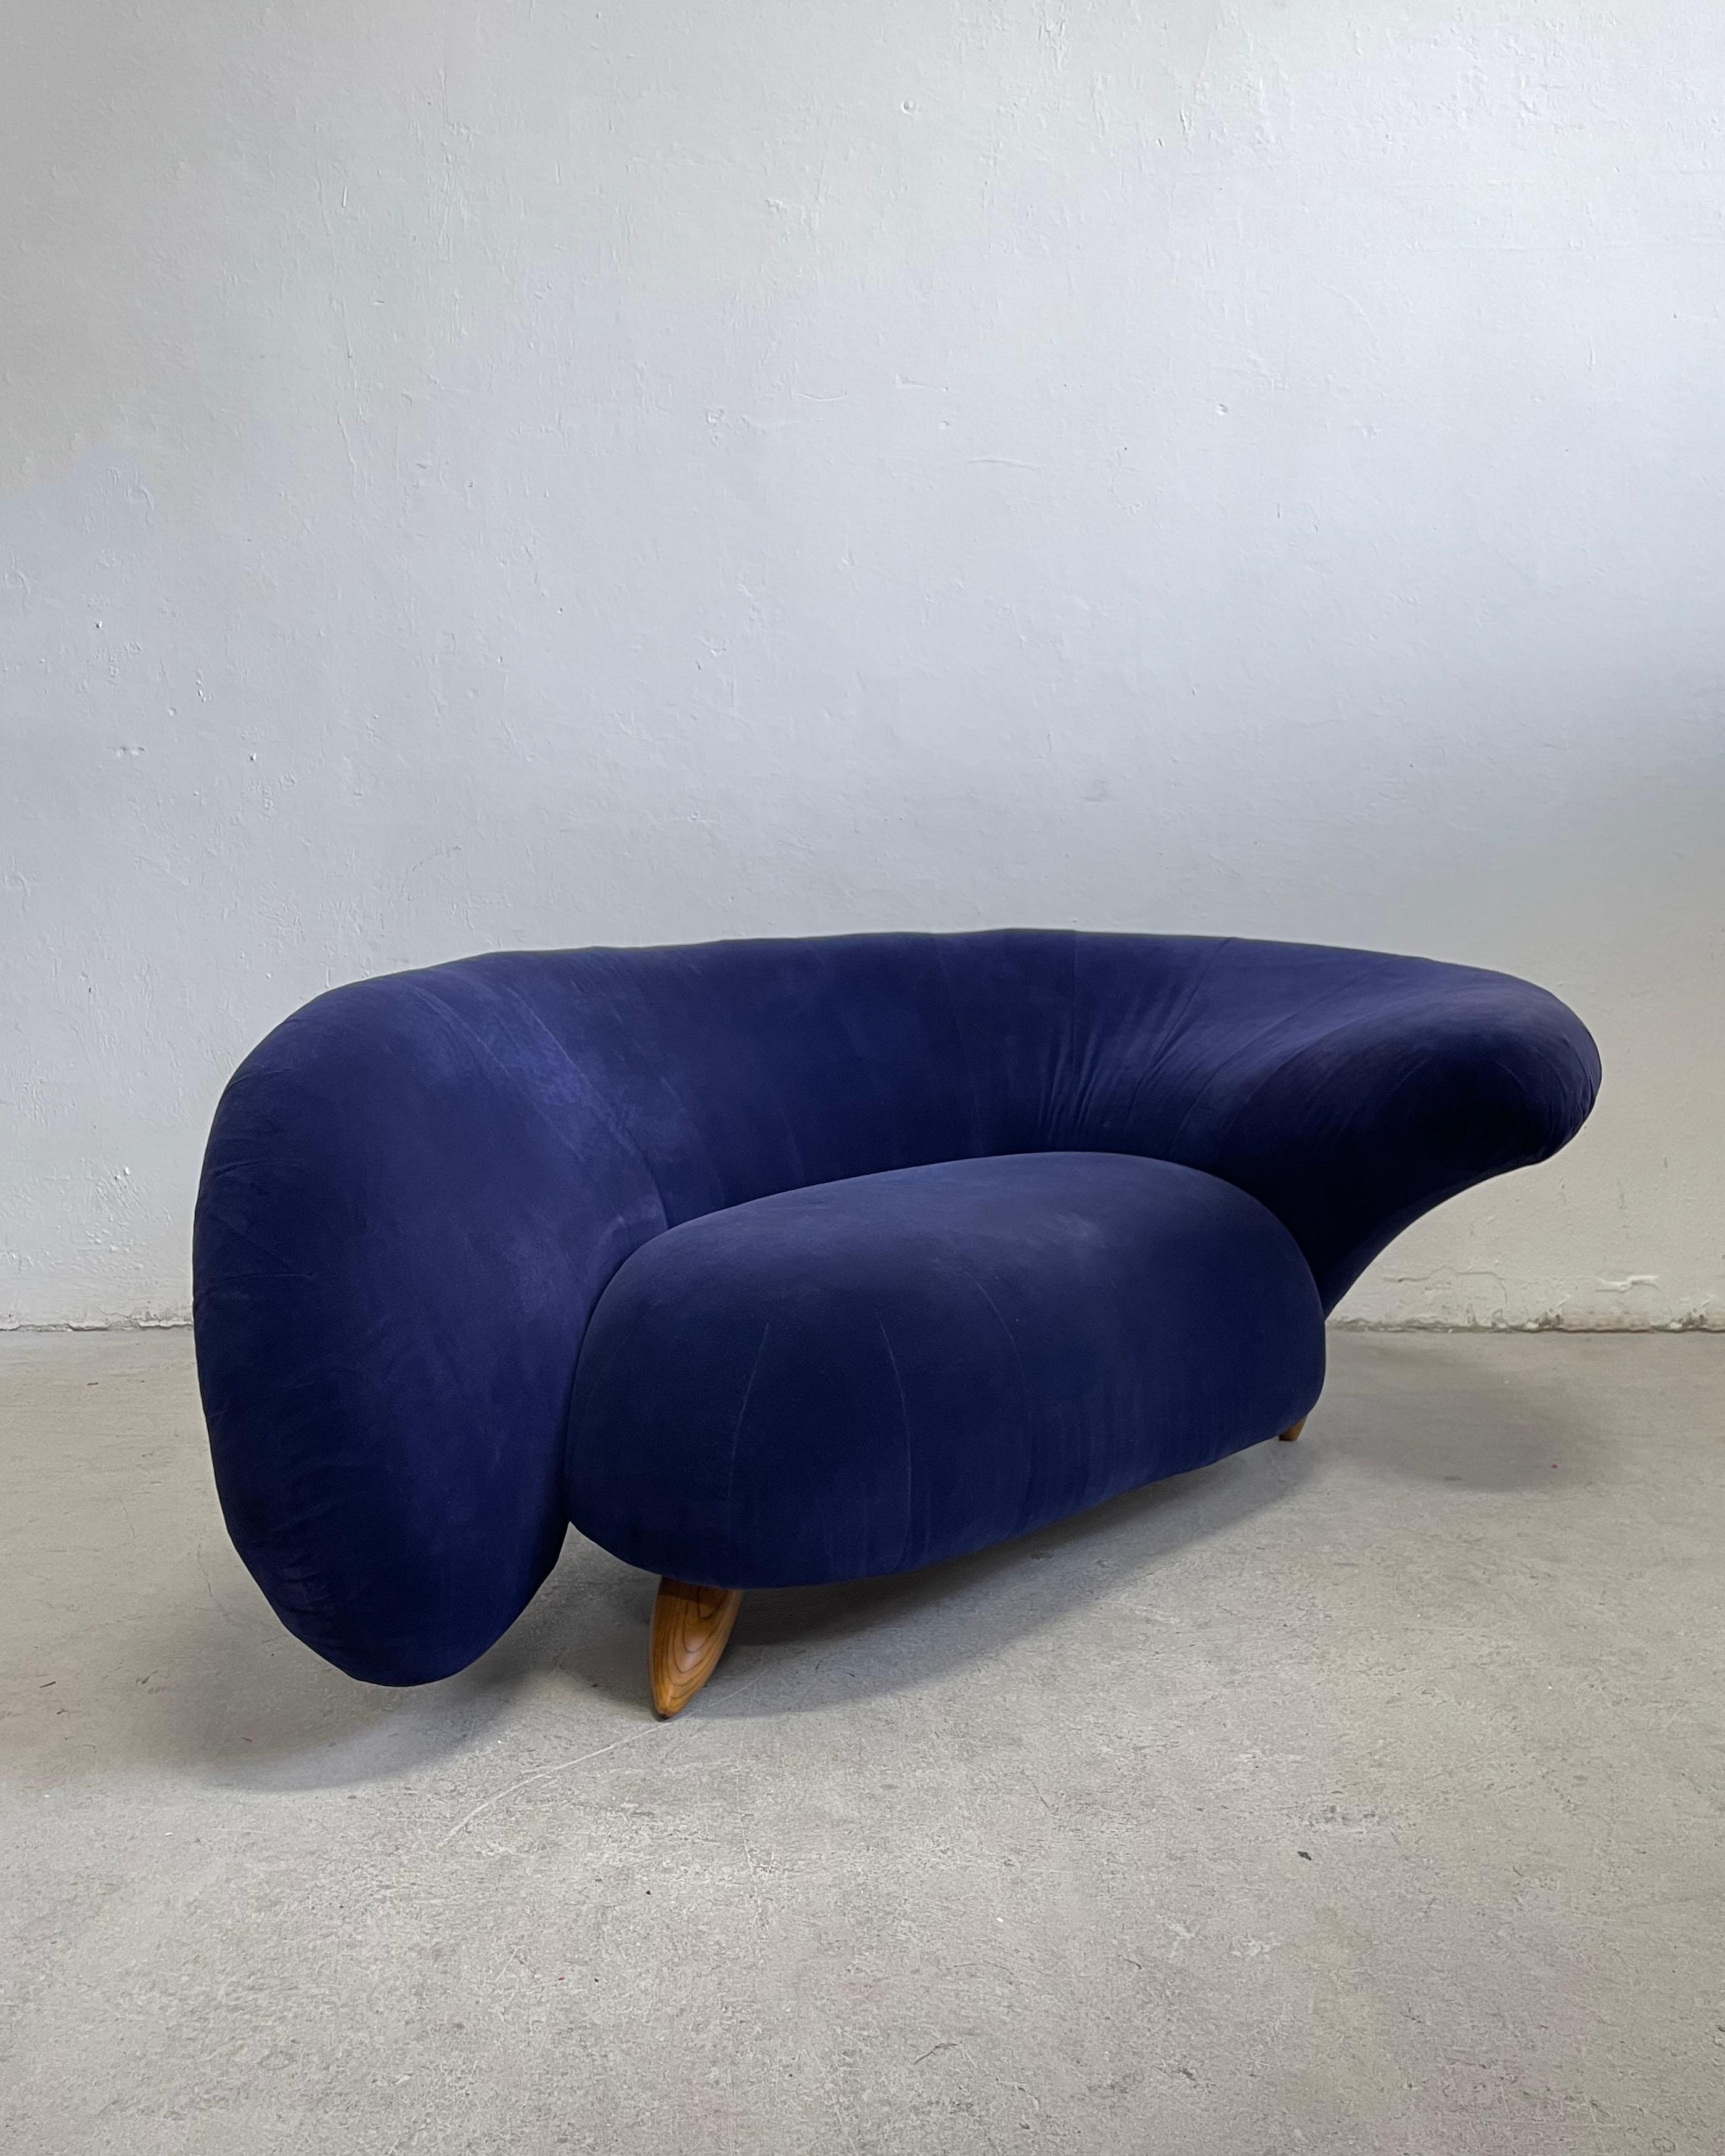 European Vintage 20th Century Modern Serpentine Curved Velvet Sofa in Navy Blue Color For Sale